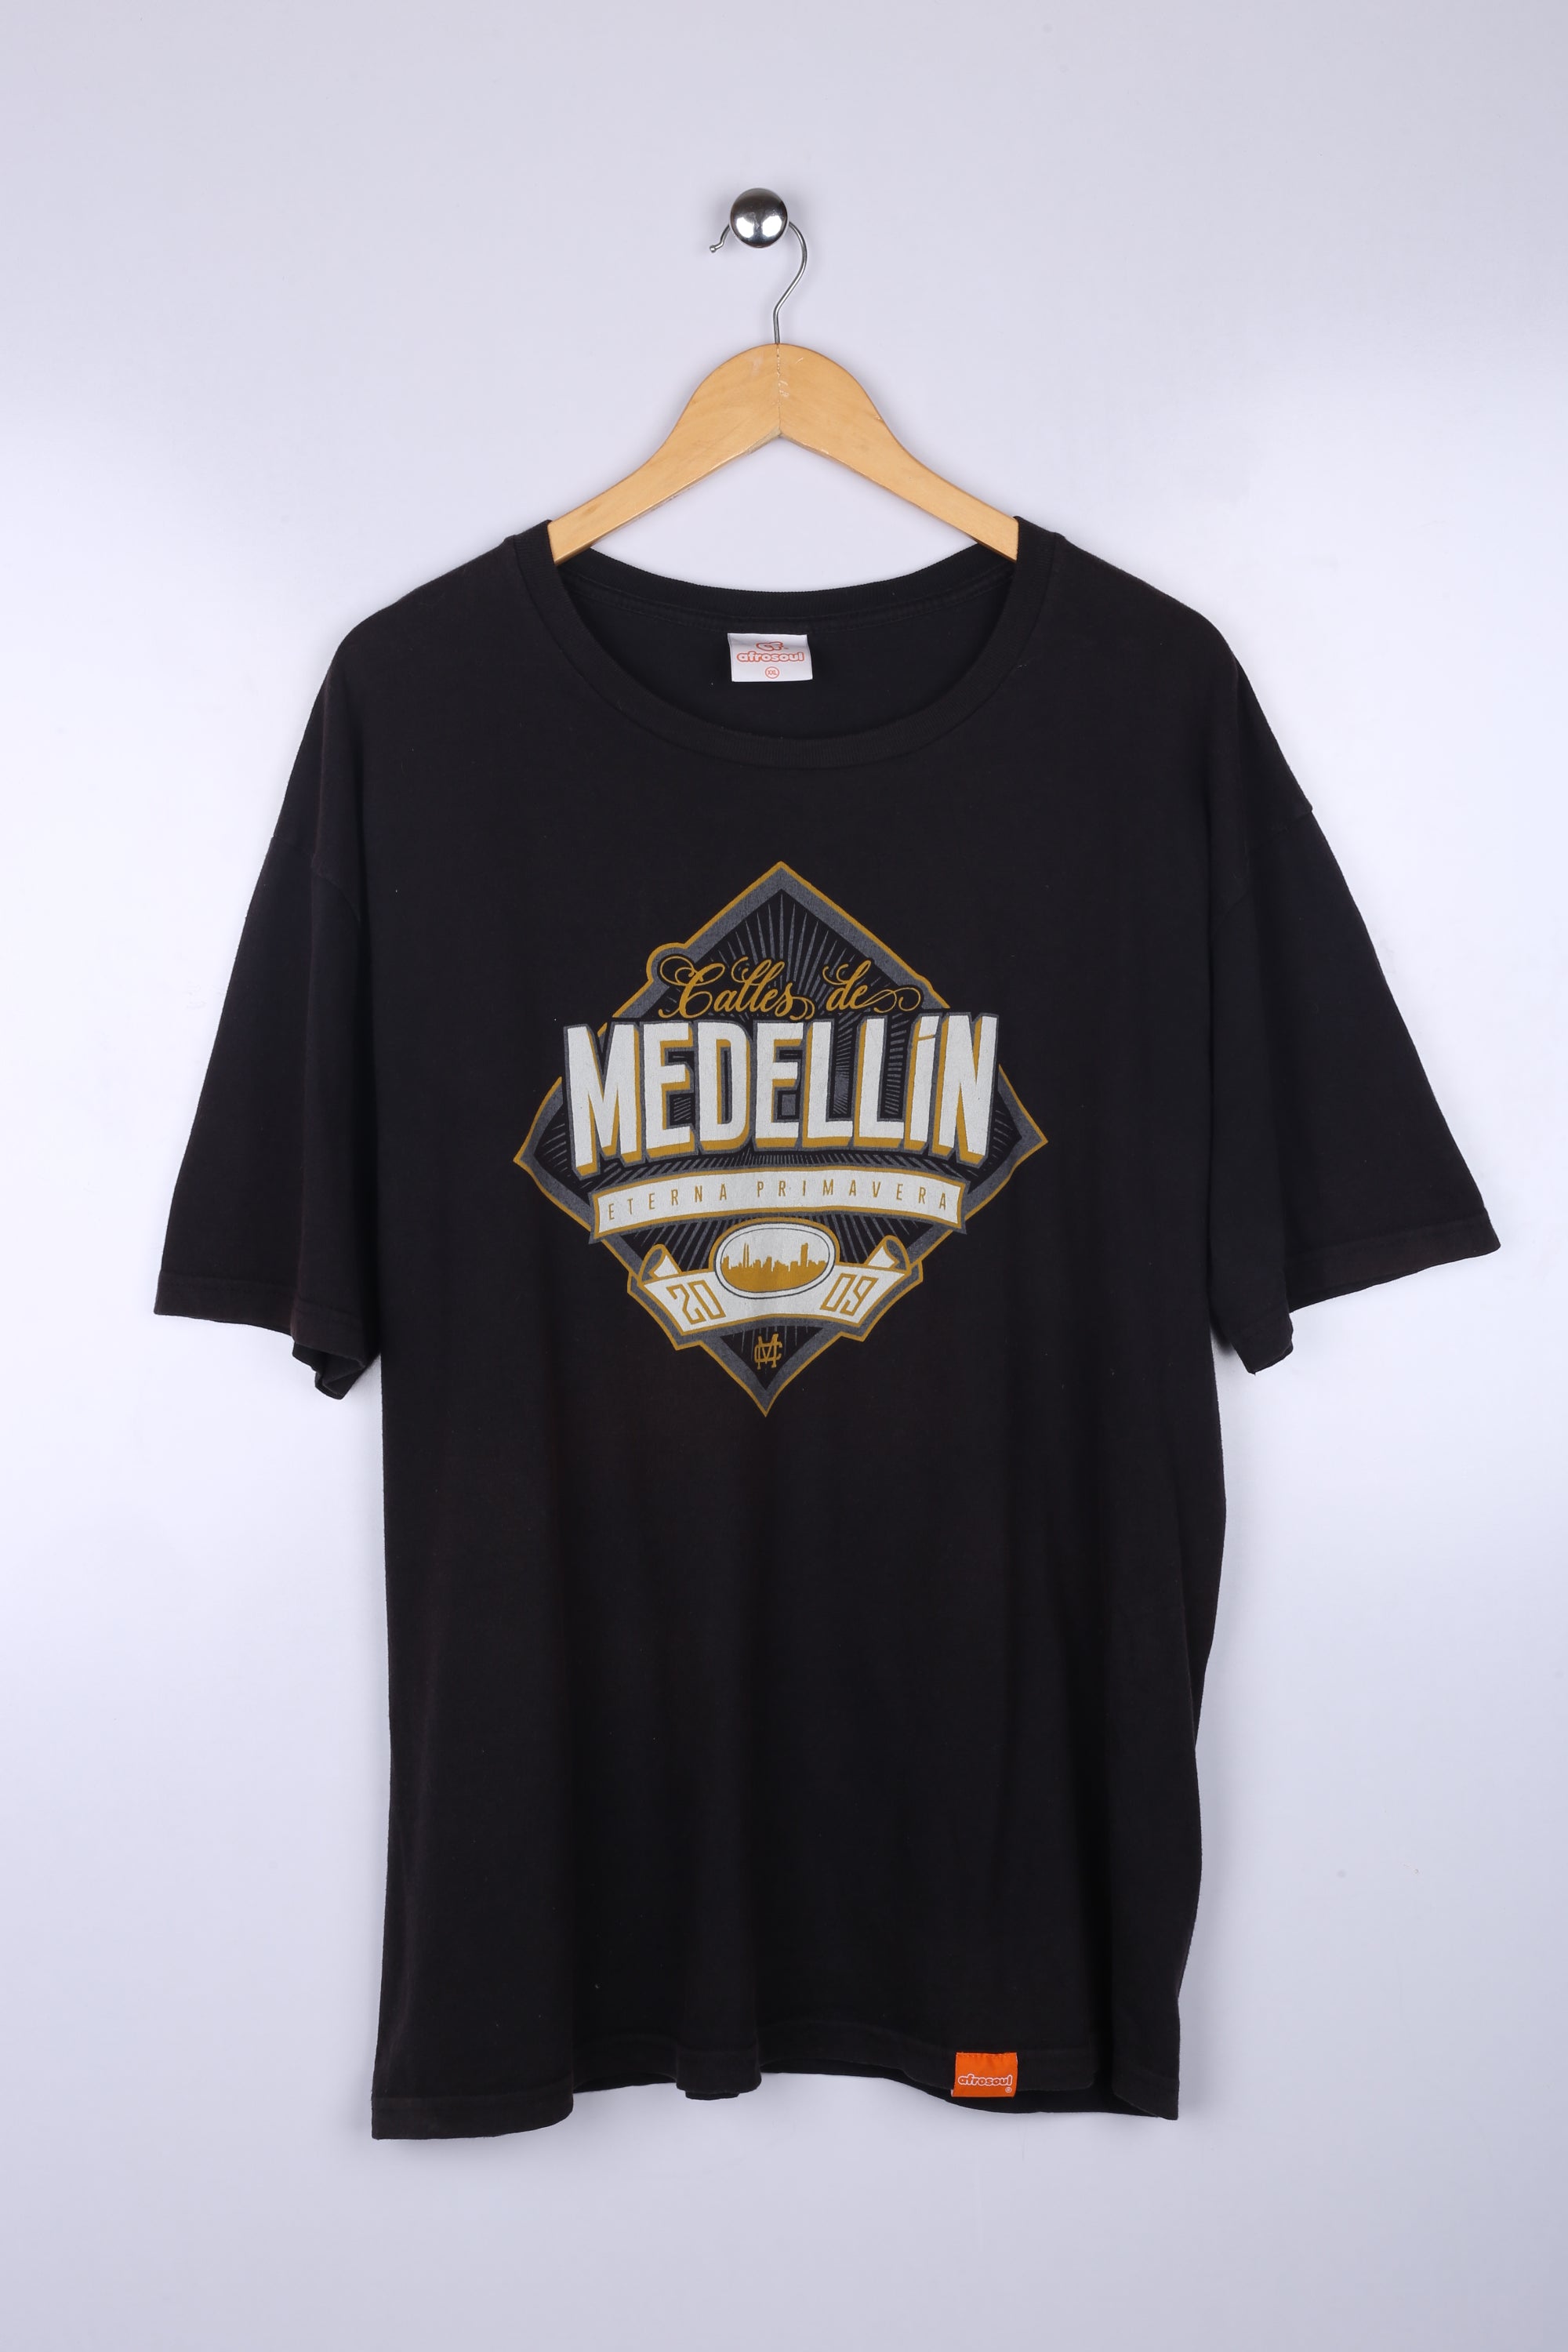 Vintage Medellin Graphic Tee Black X Large